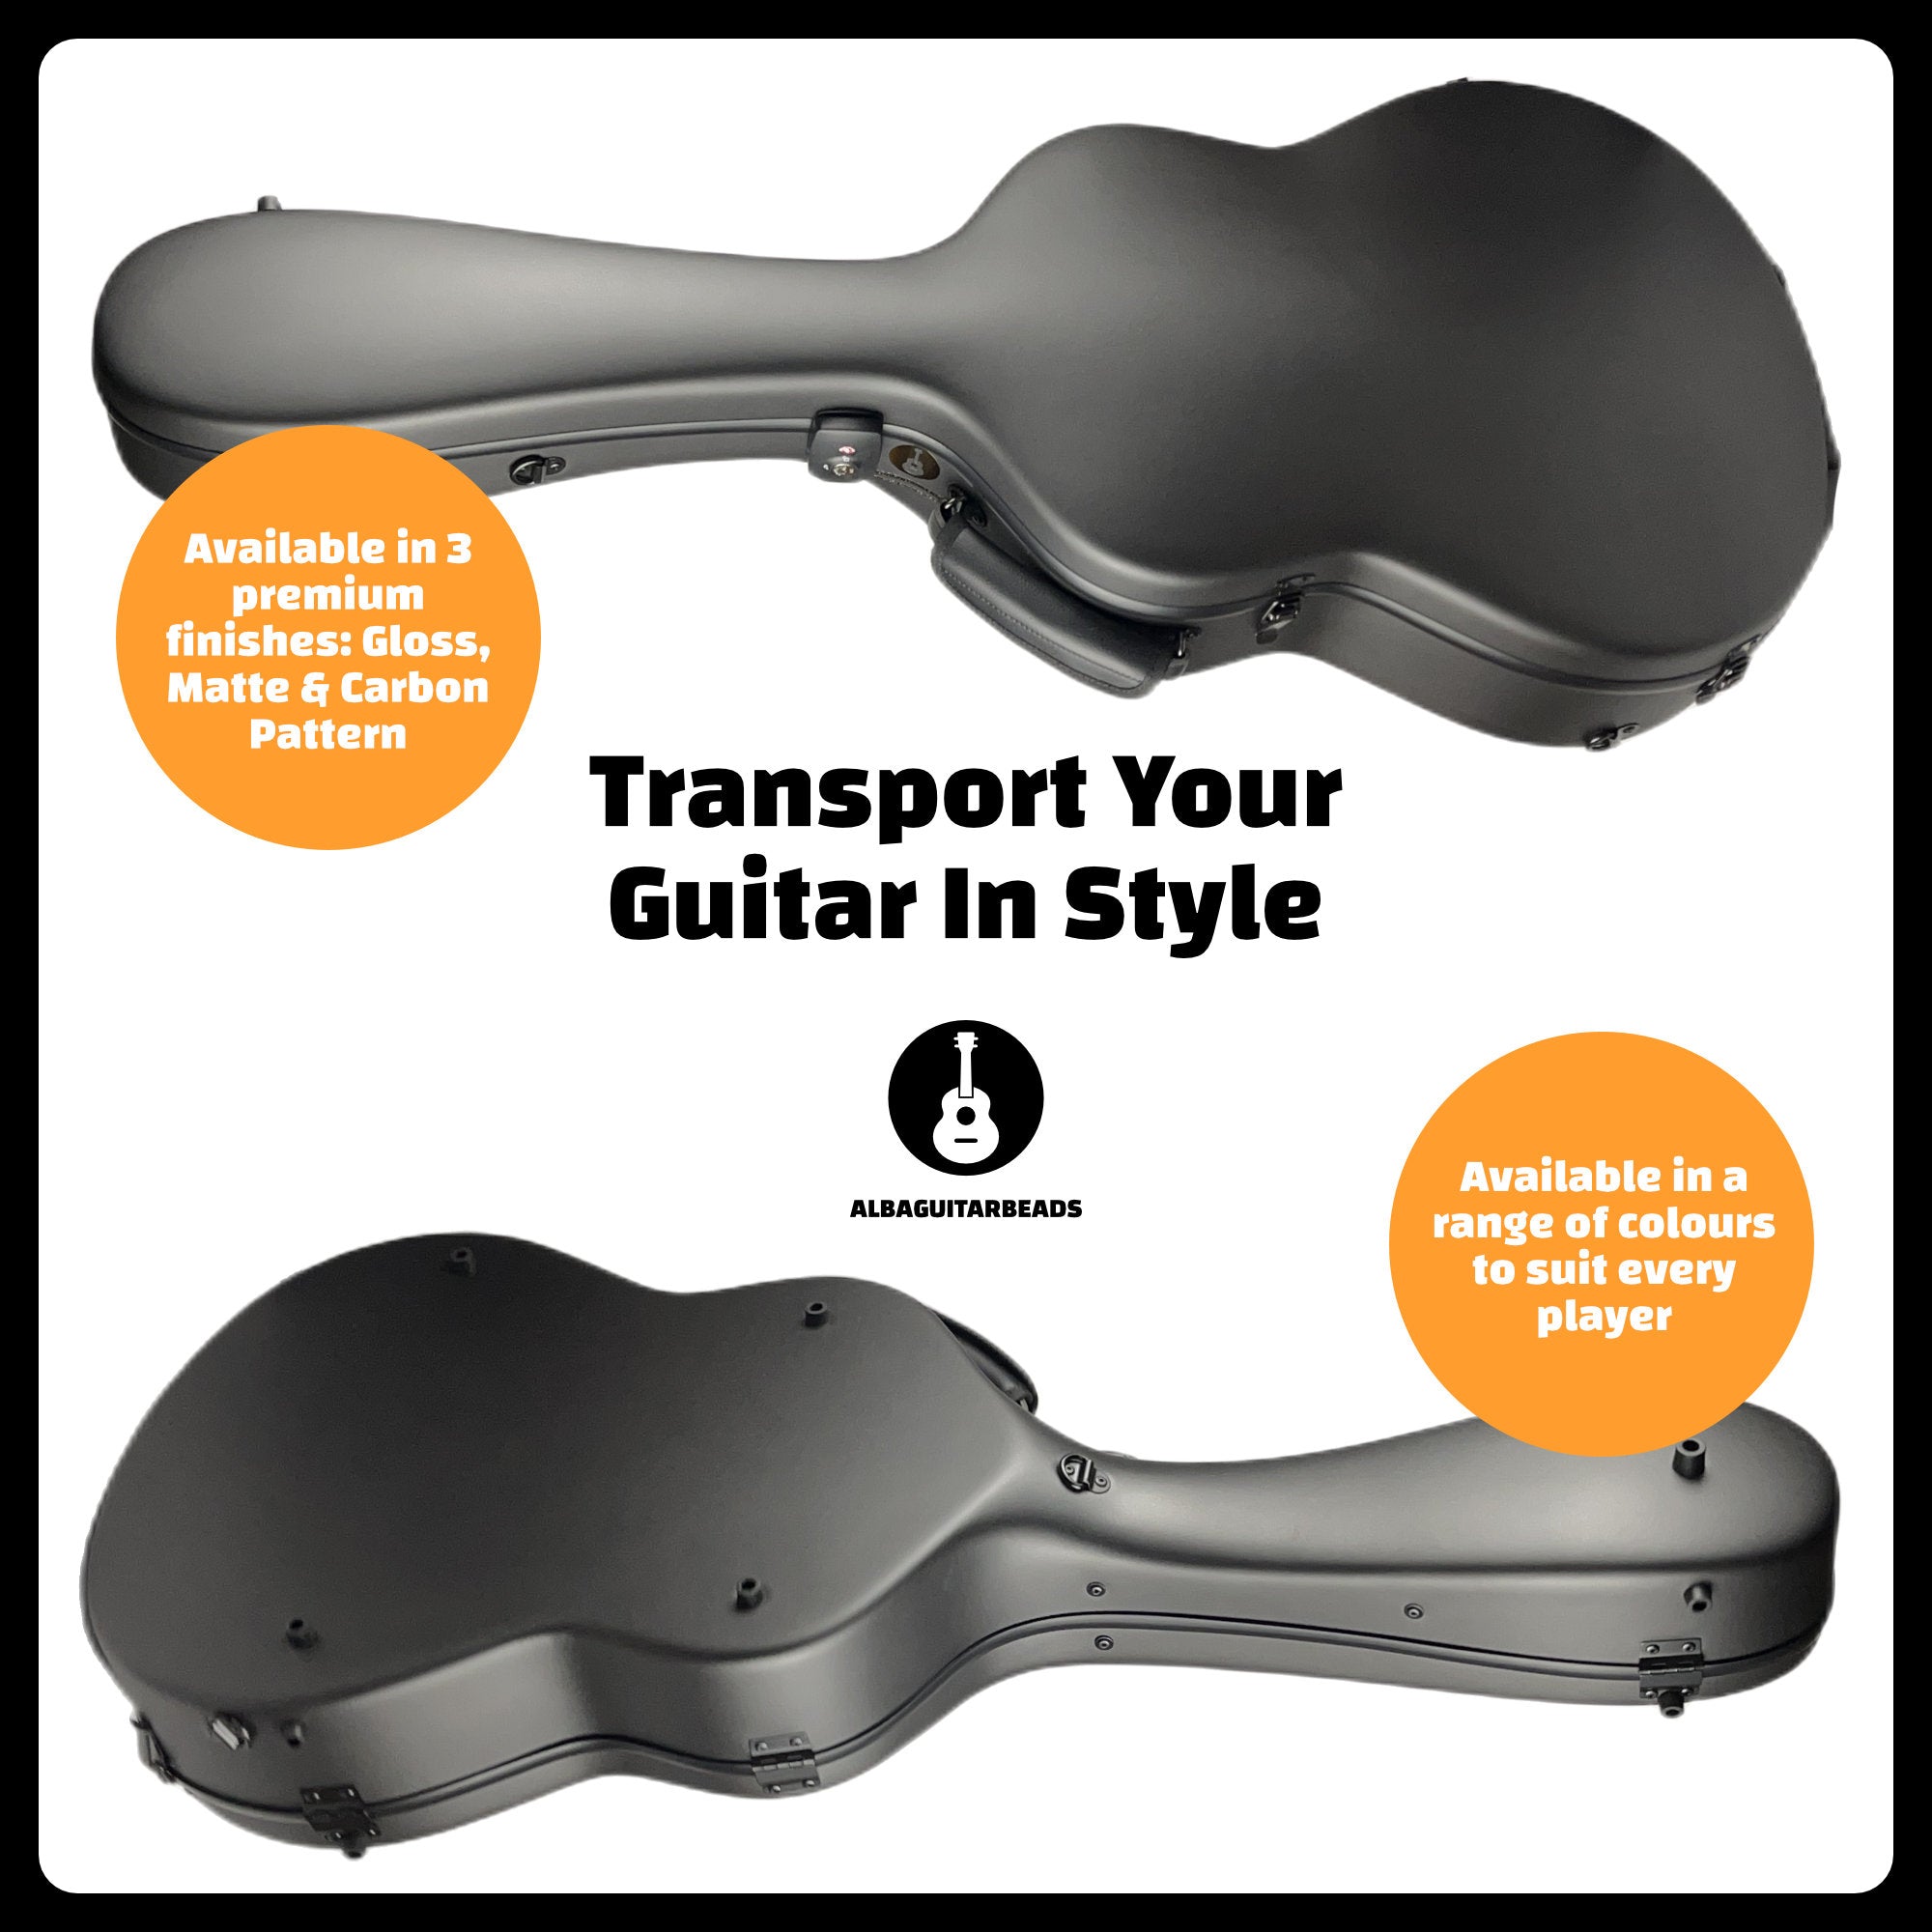 Carbon Alba Guitar Case Black Matte for Classical Guitar Acoustic, Flamenco guitar case